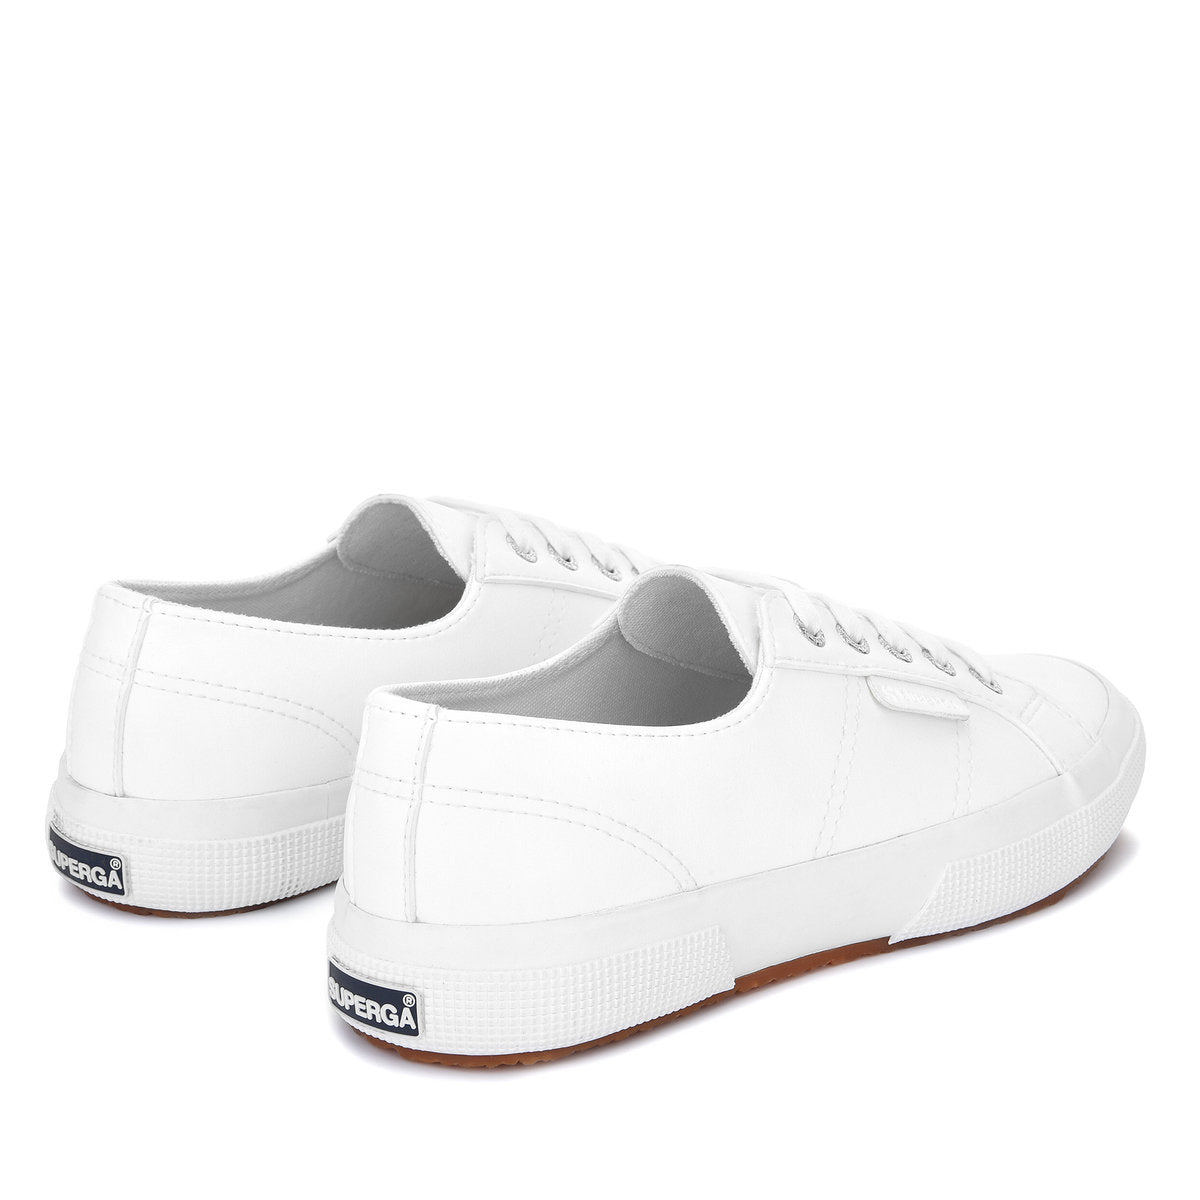 Superga Men's 2750 Corn Based Leather Sneakers White